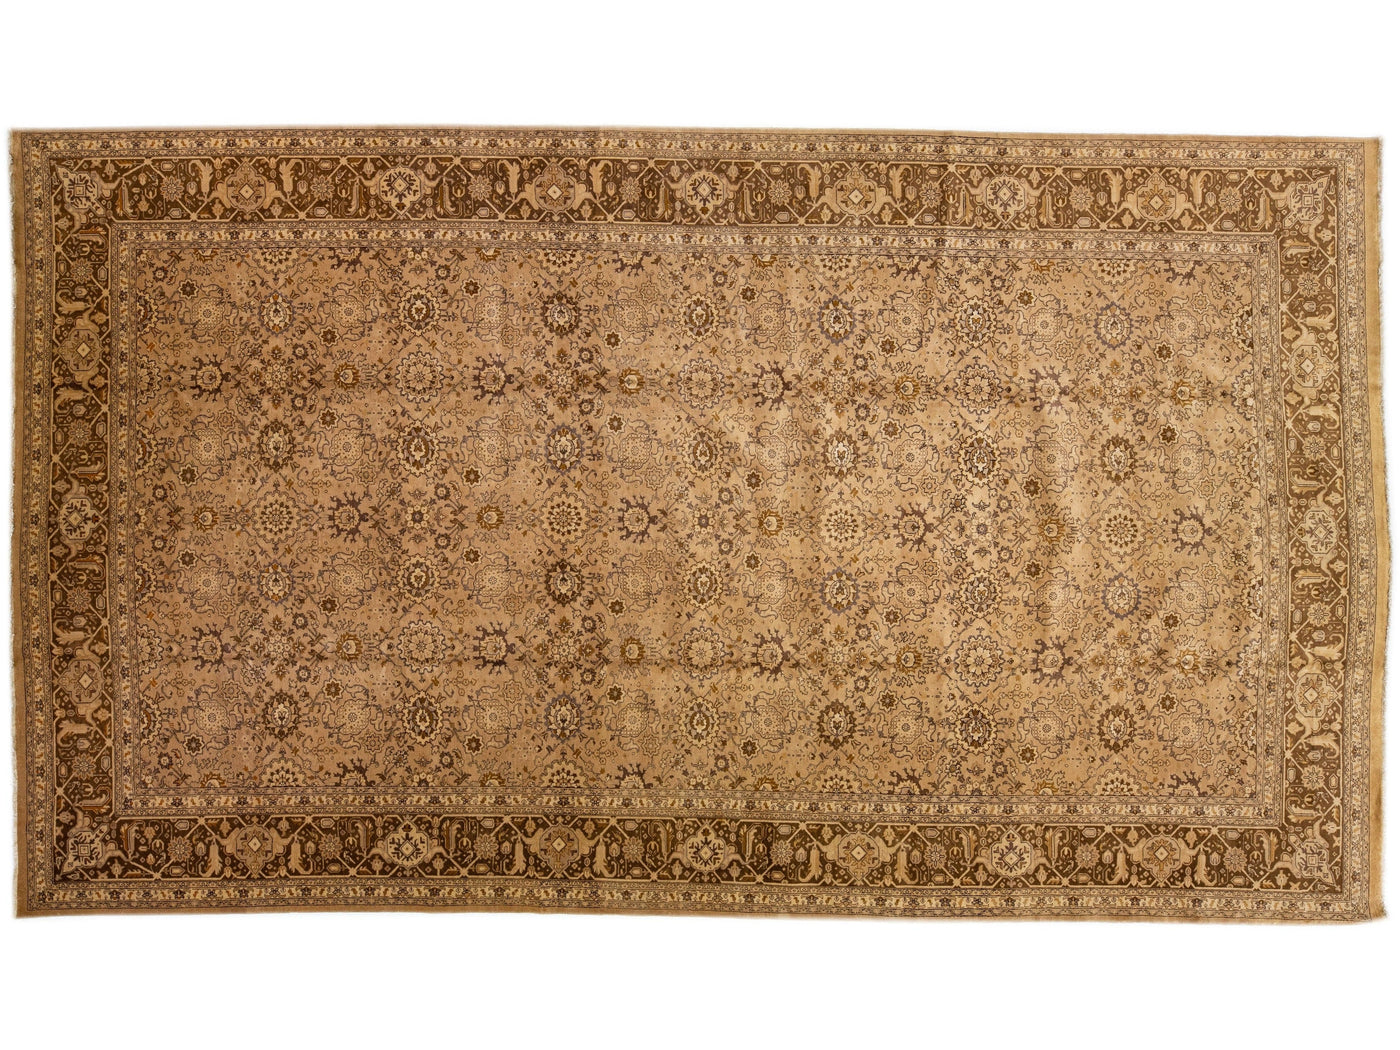 Oversize Antique Tabriz Handmade Allover Designed Brown Persian Wool Rug